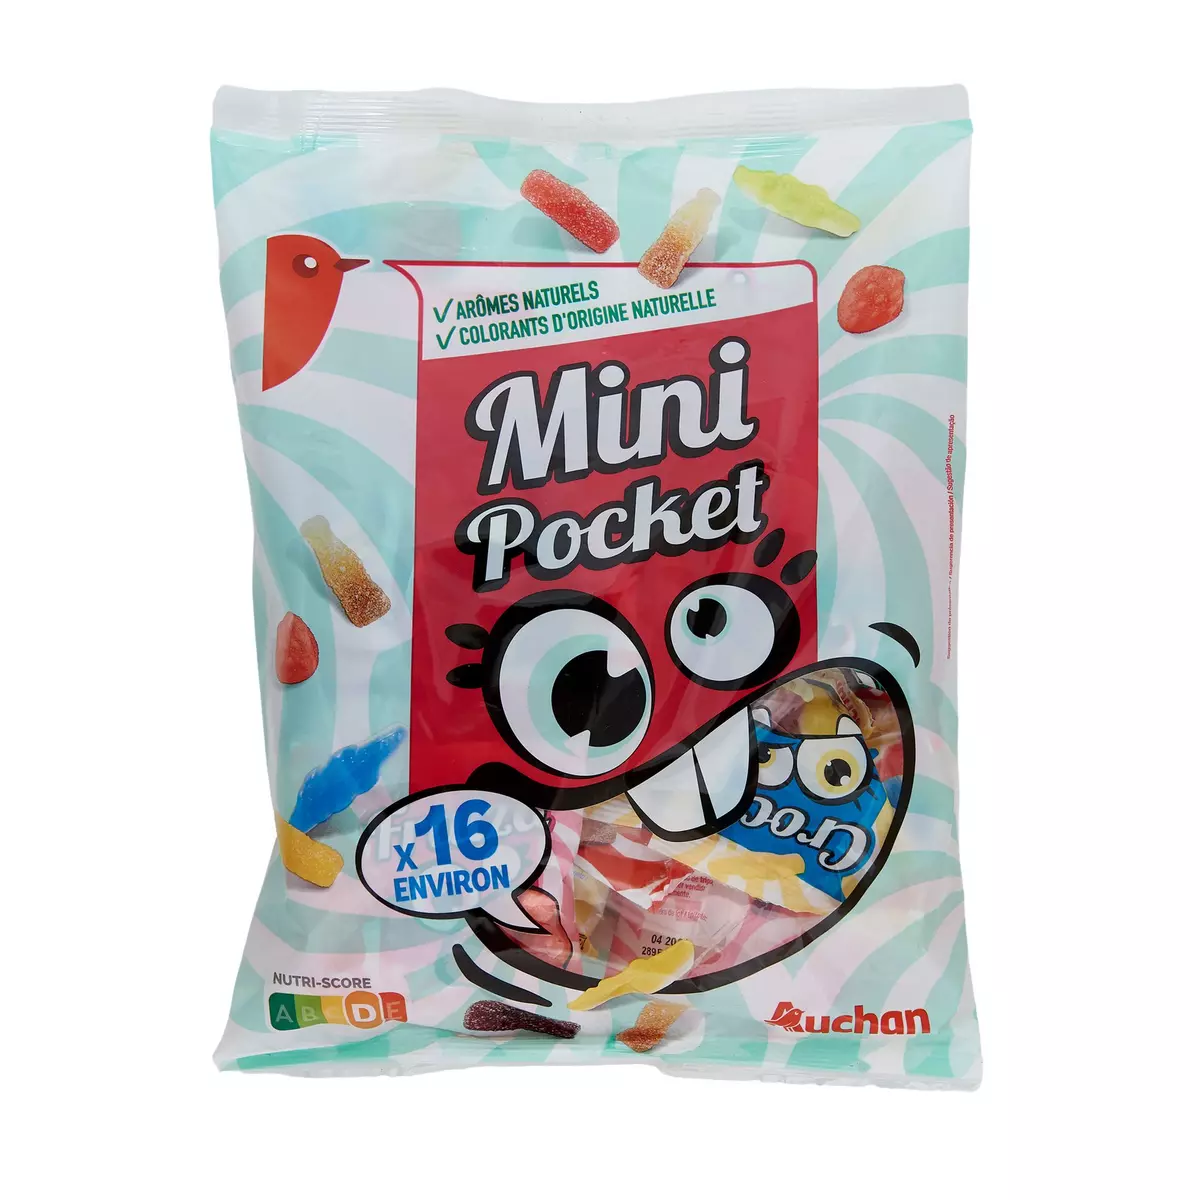 AUCHAN Mini Pocket assortiment de bonbons 400g